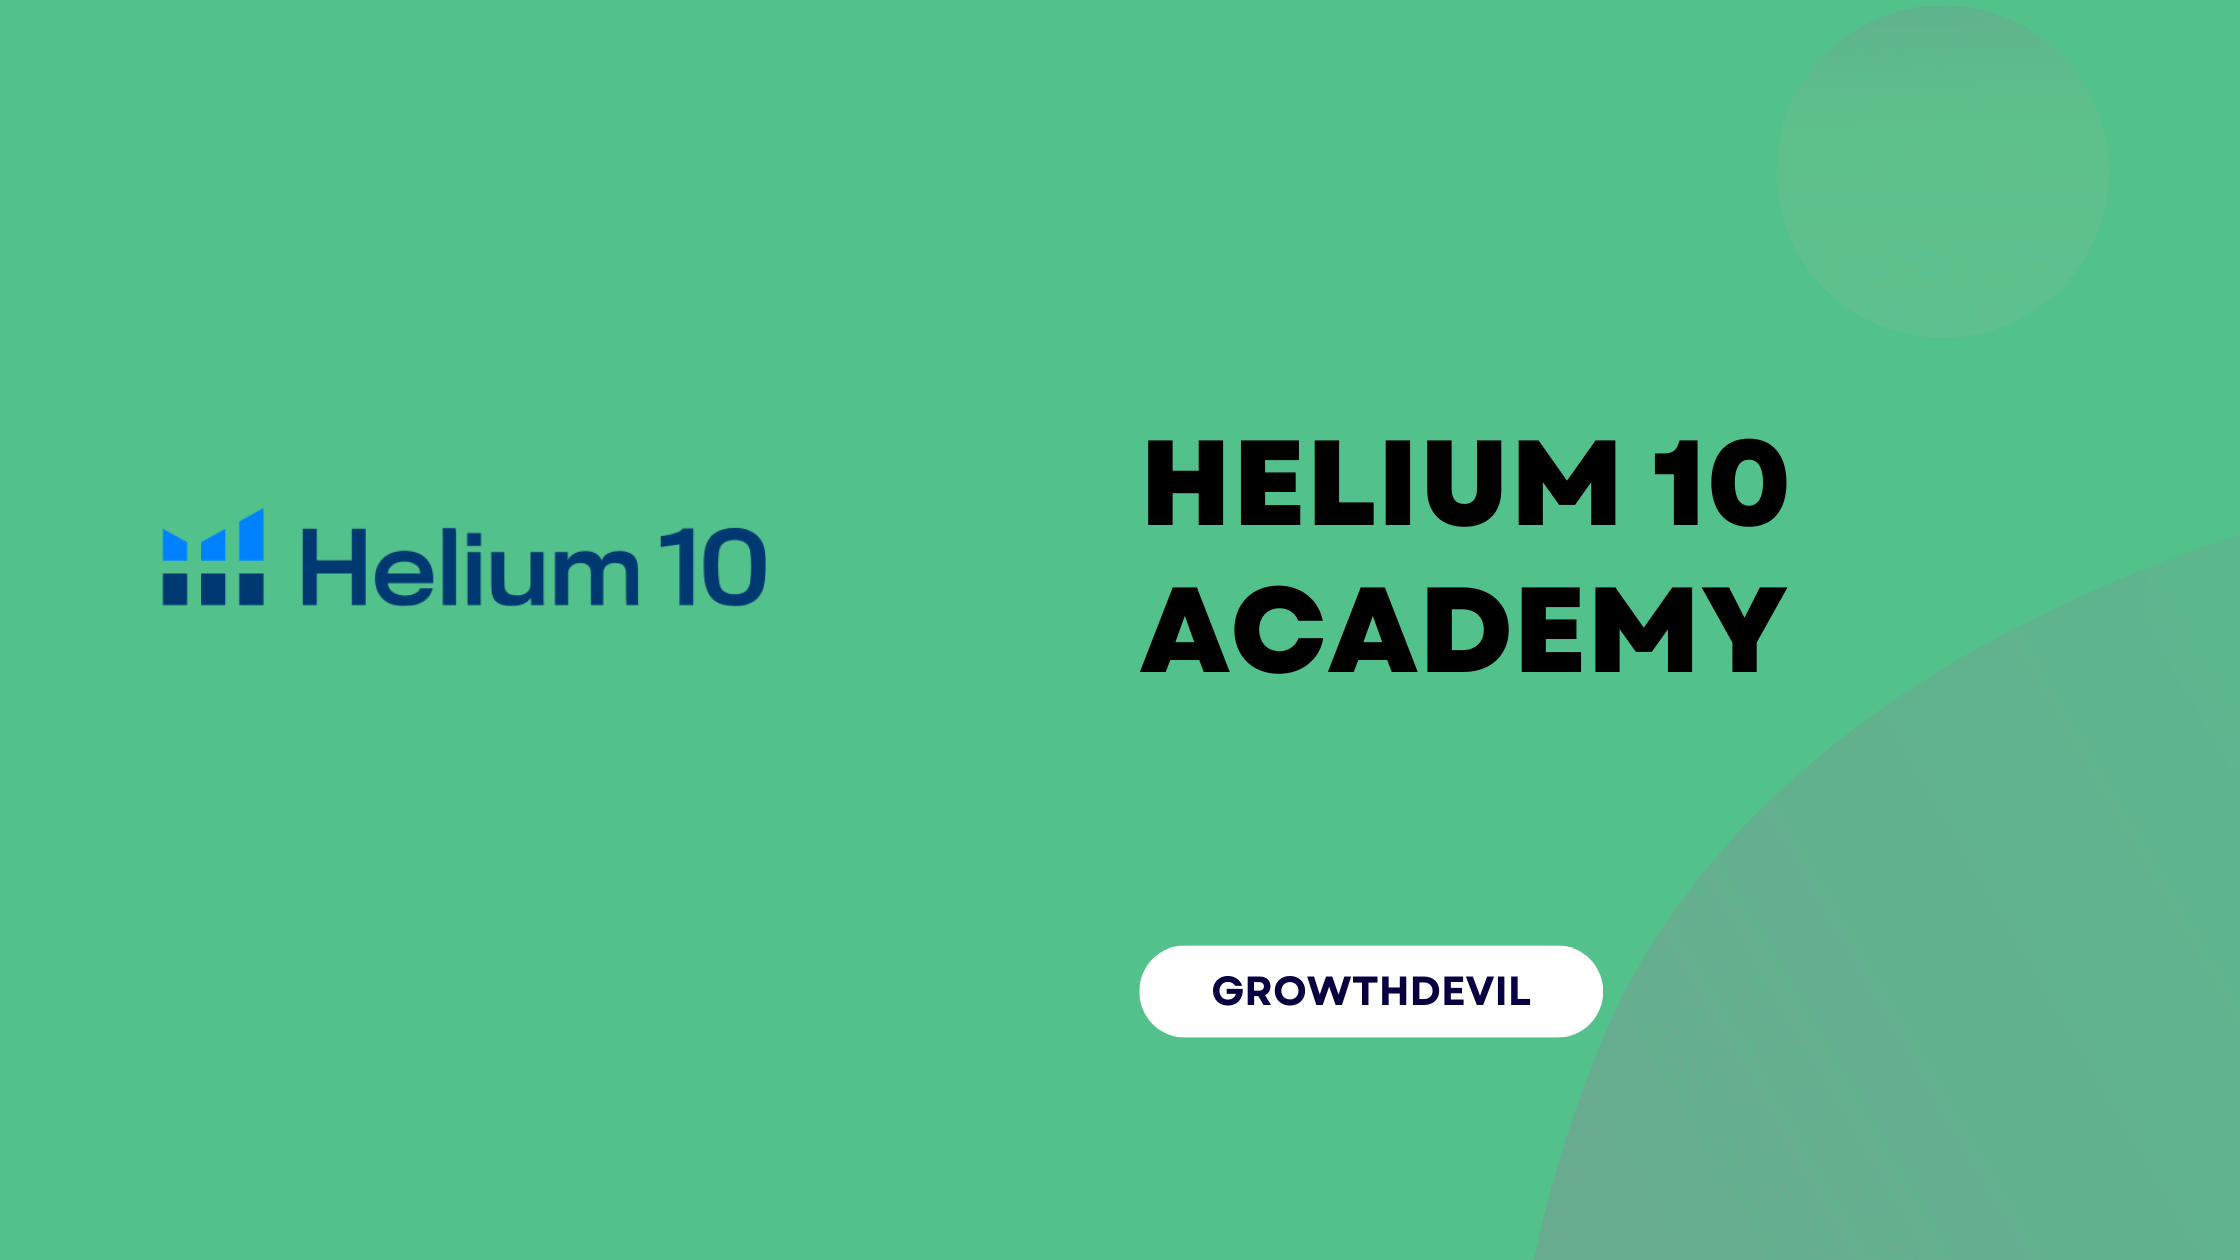 Helium 10 Academy - GrowthDevil